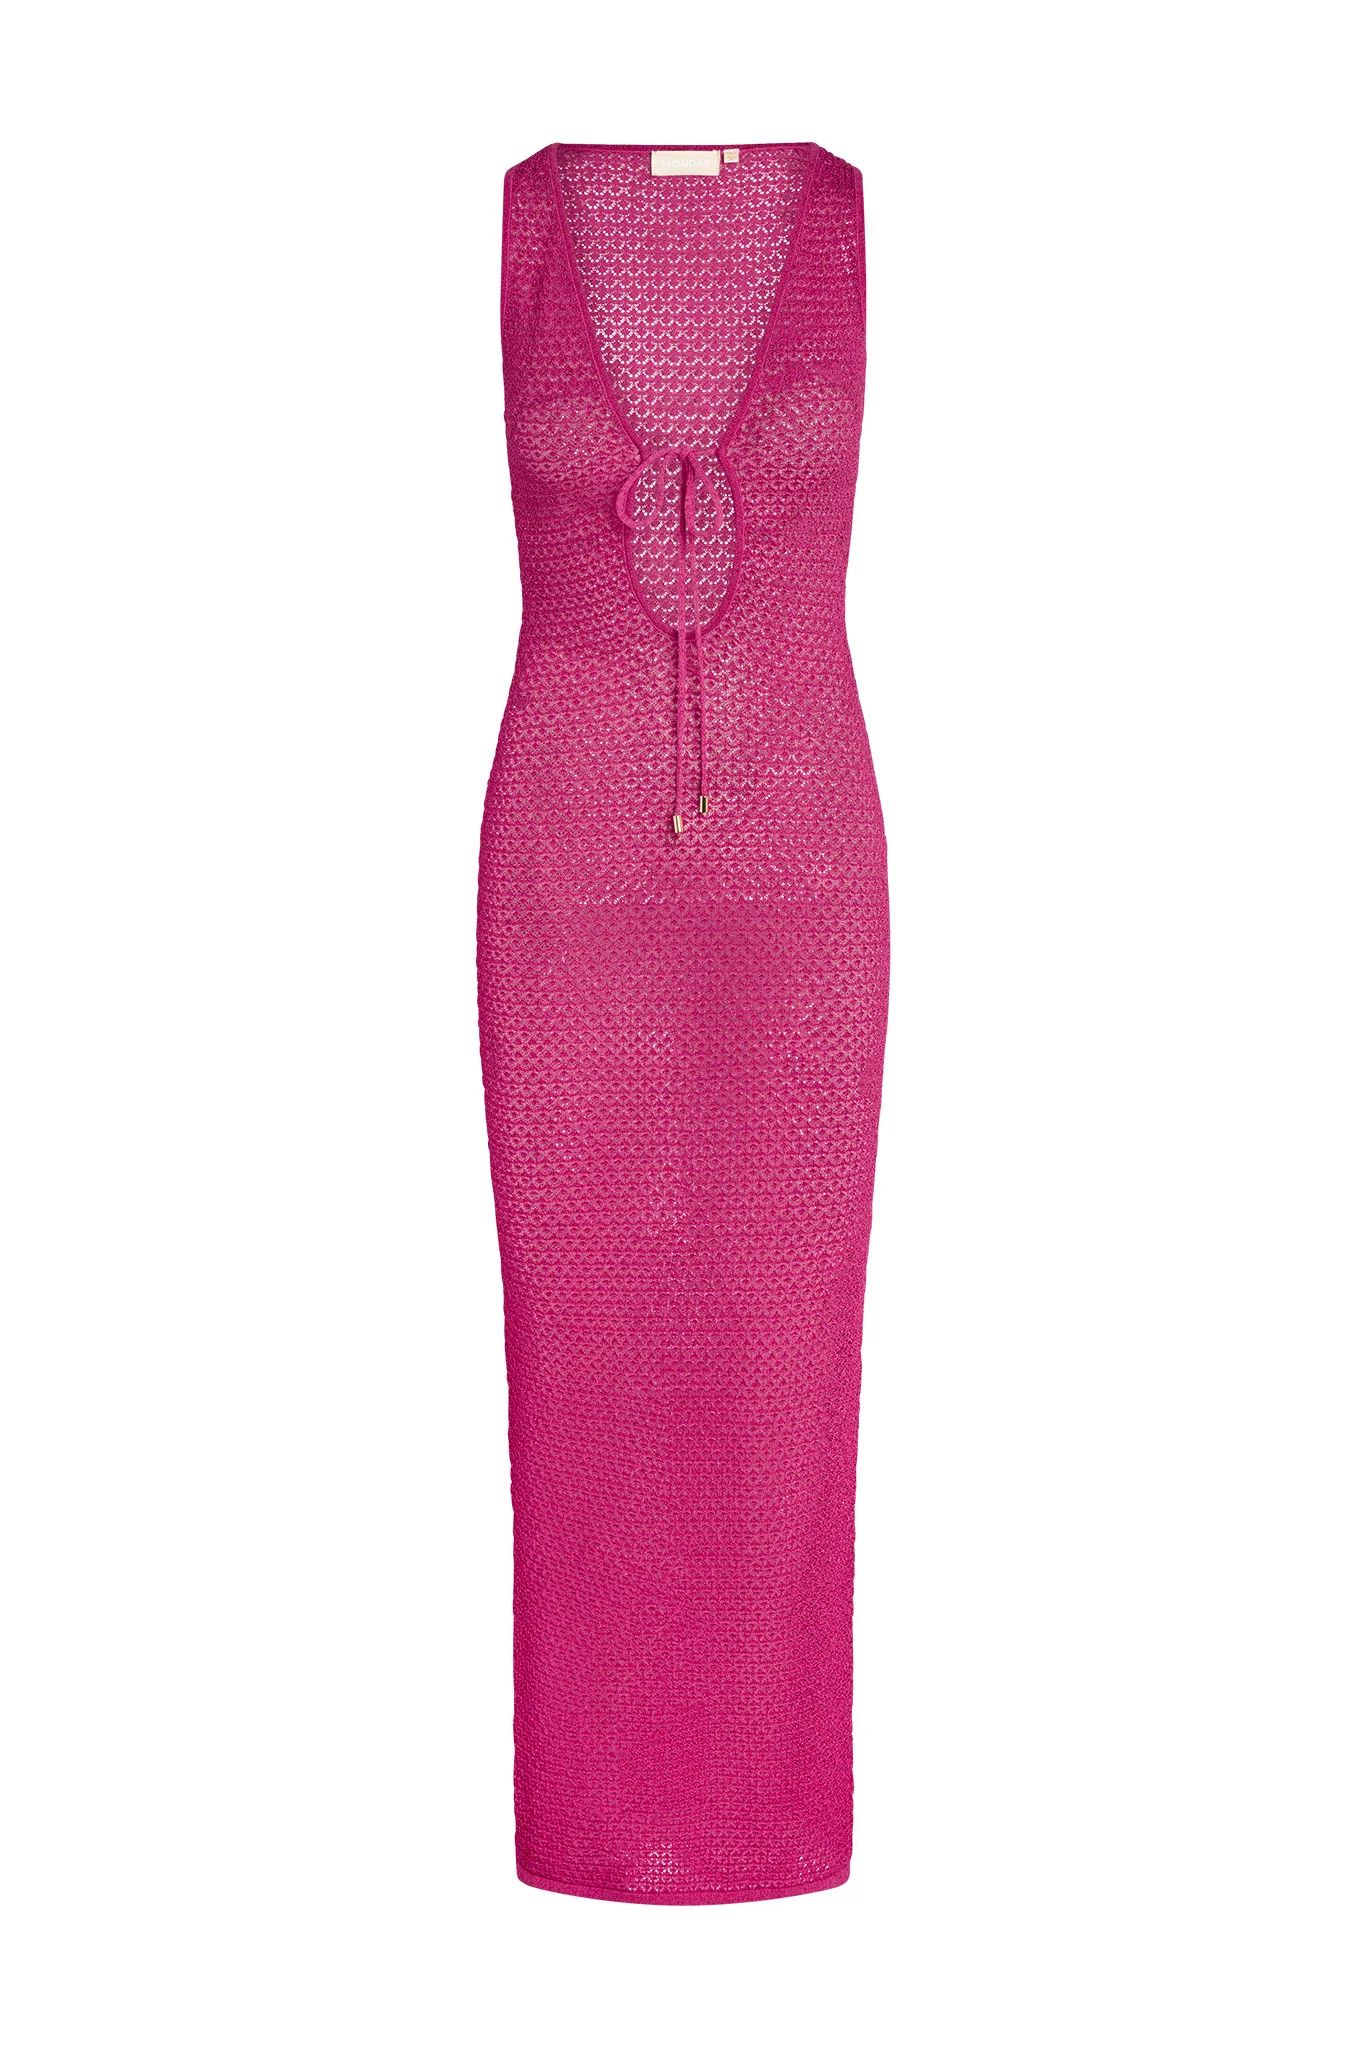 Monte Carlo Tie Dress - Dragon Fruit Lurex Lace Crochet | Monday Swimwear